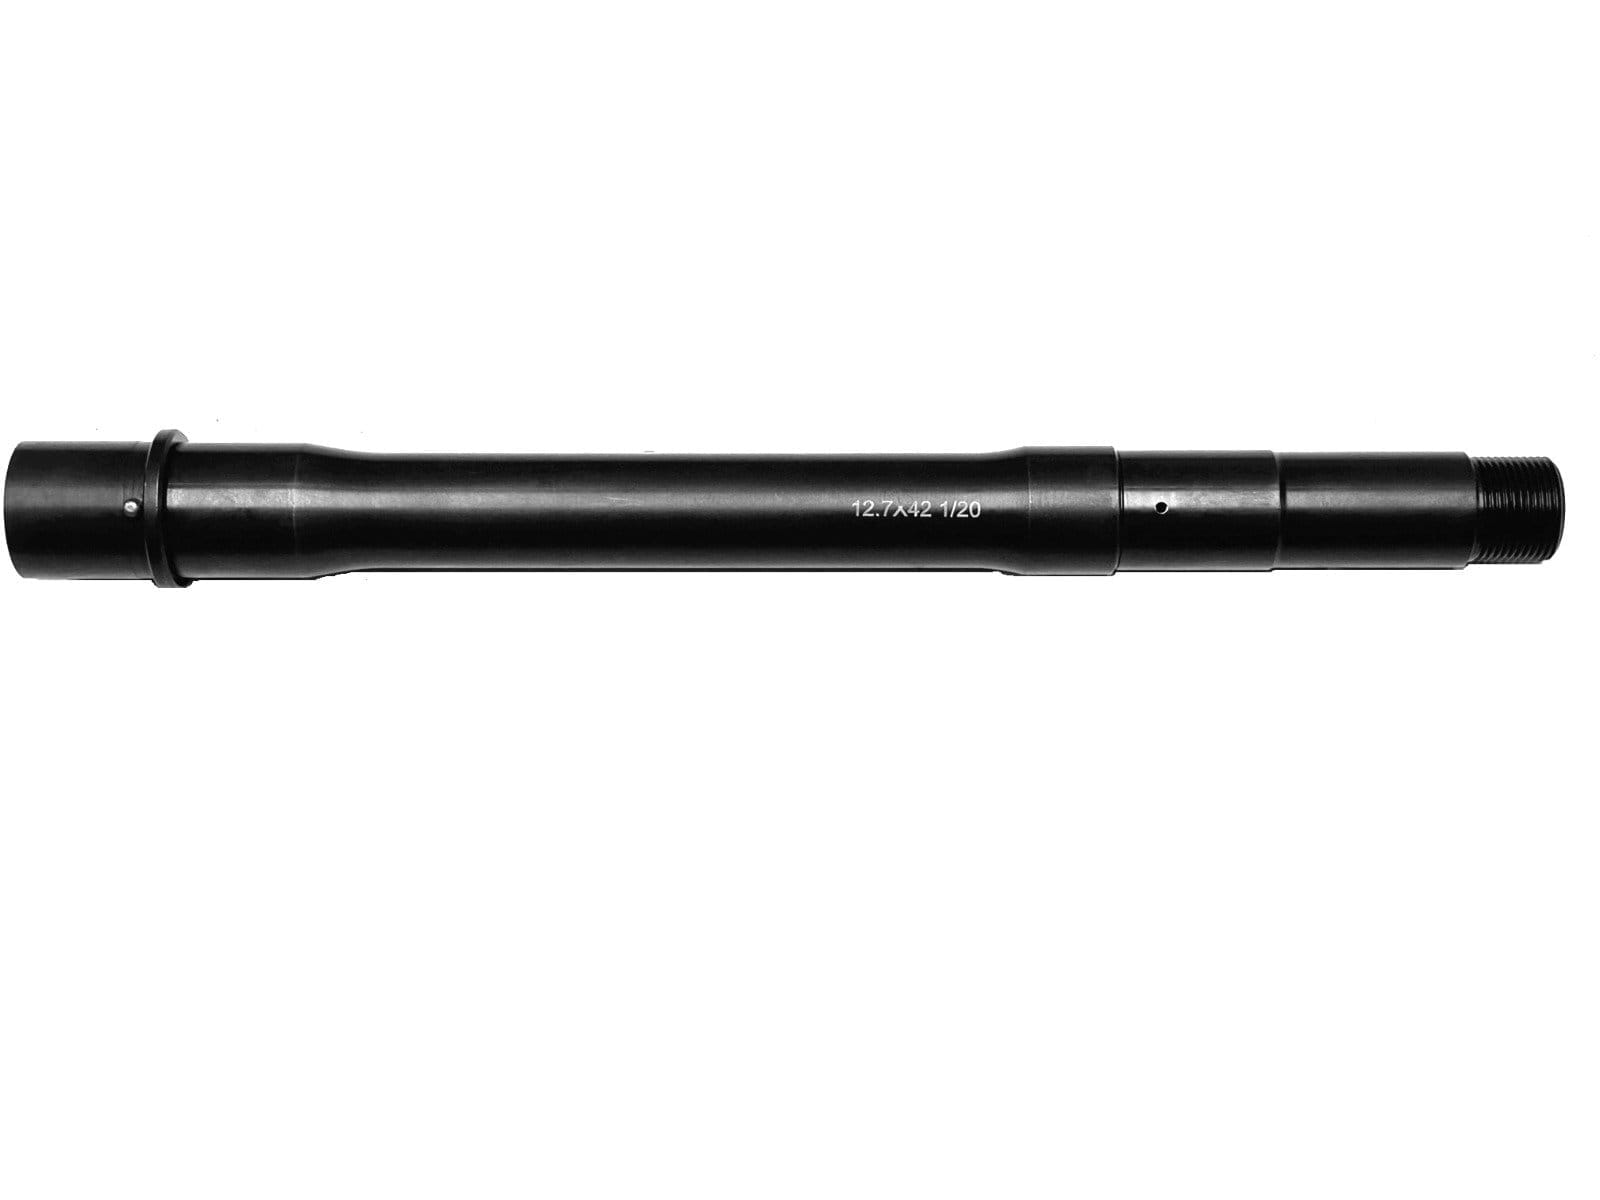 Image of Hitman Industries 10.5 inch AR-15 50 Beowulf (12.7x42) Nitride Barrel